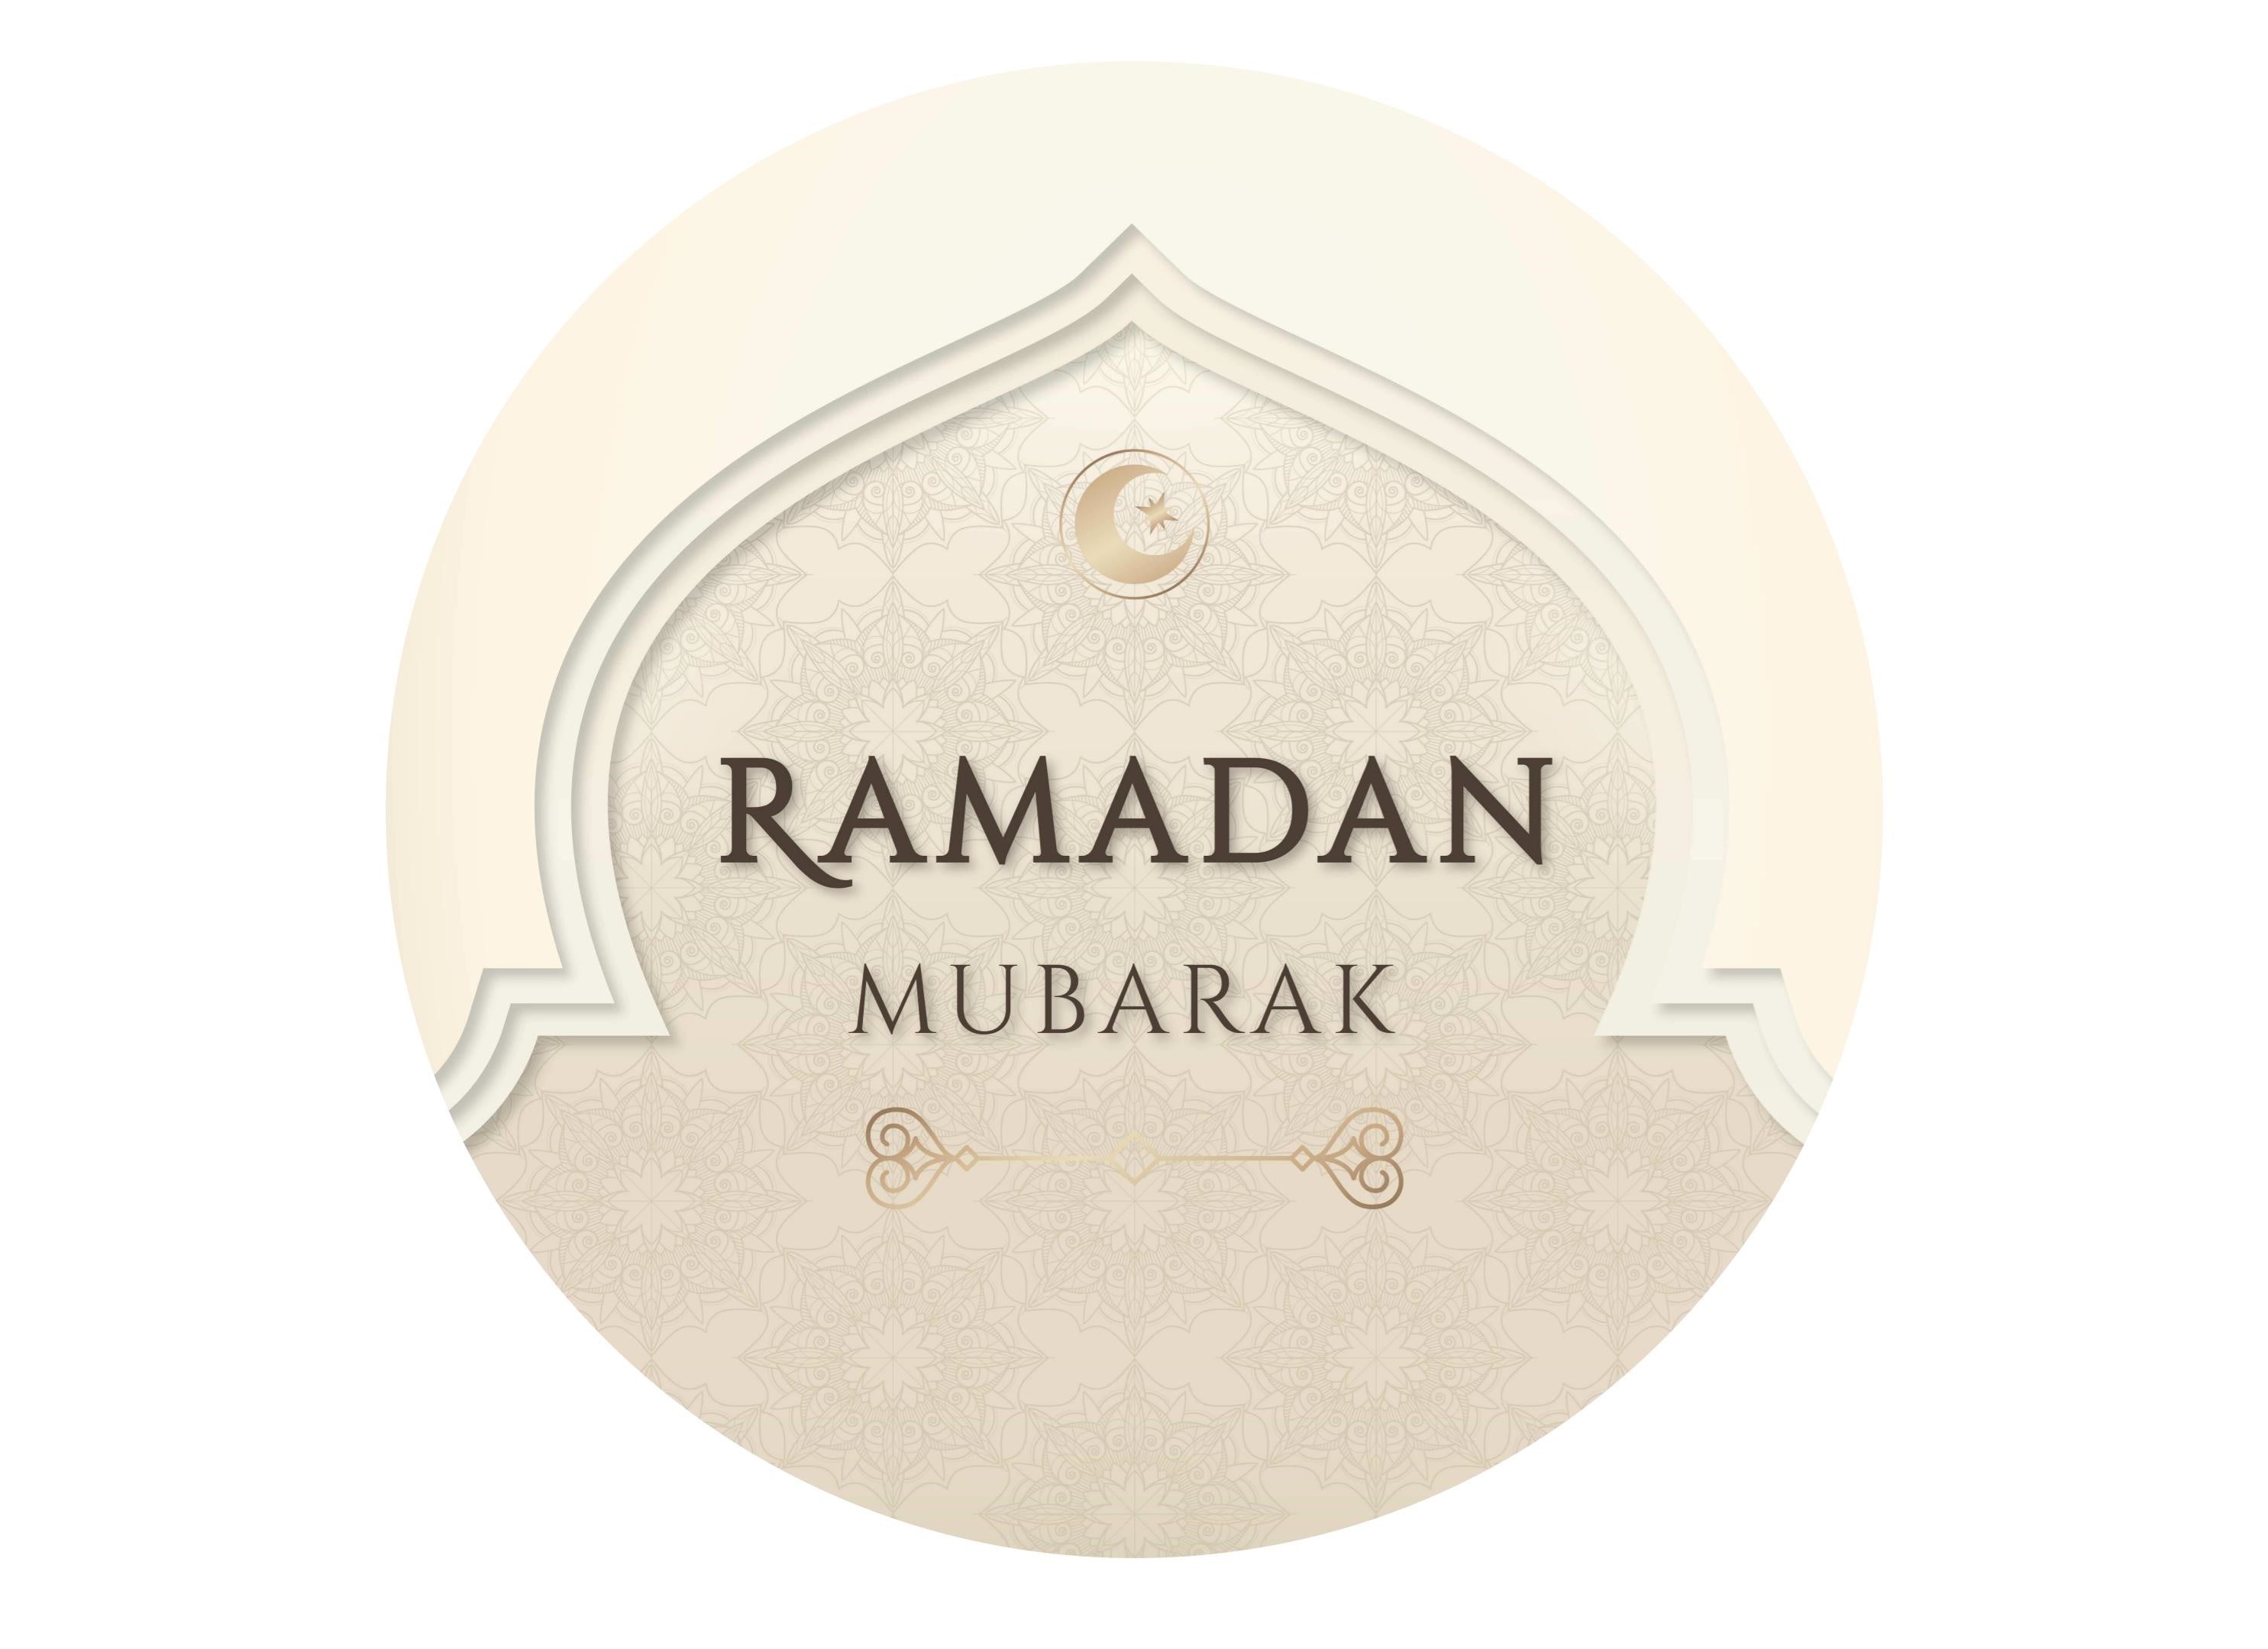 Ramadan Mubarak printed cake topper